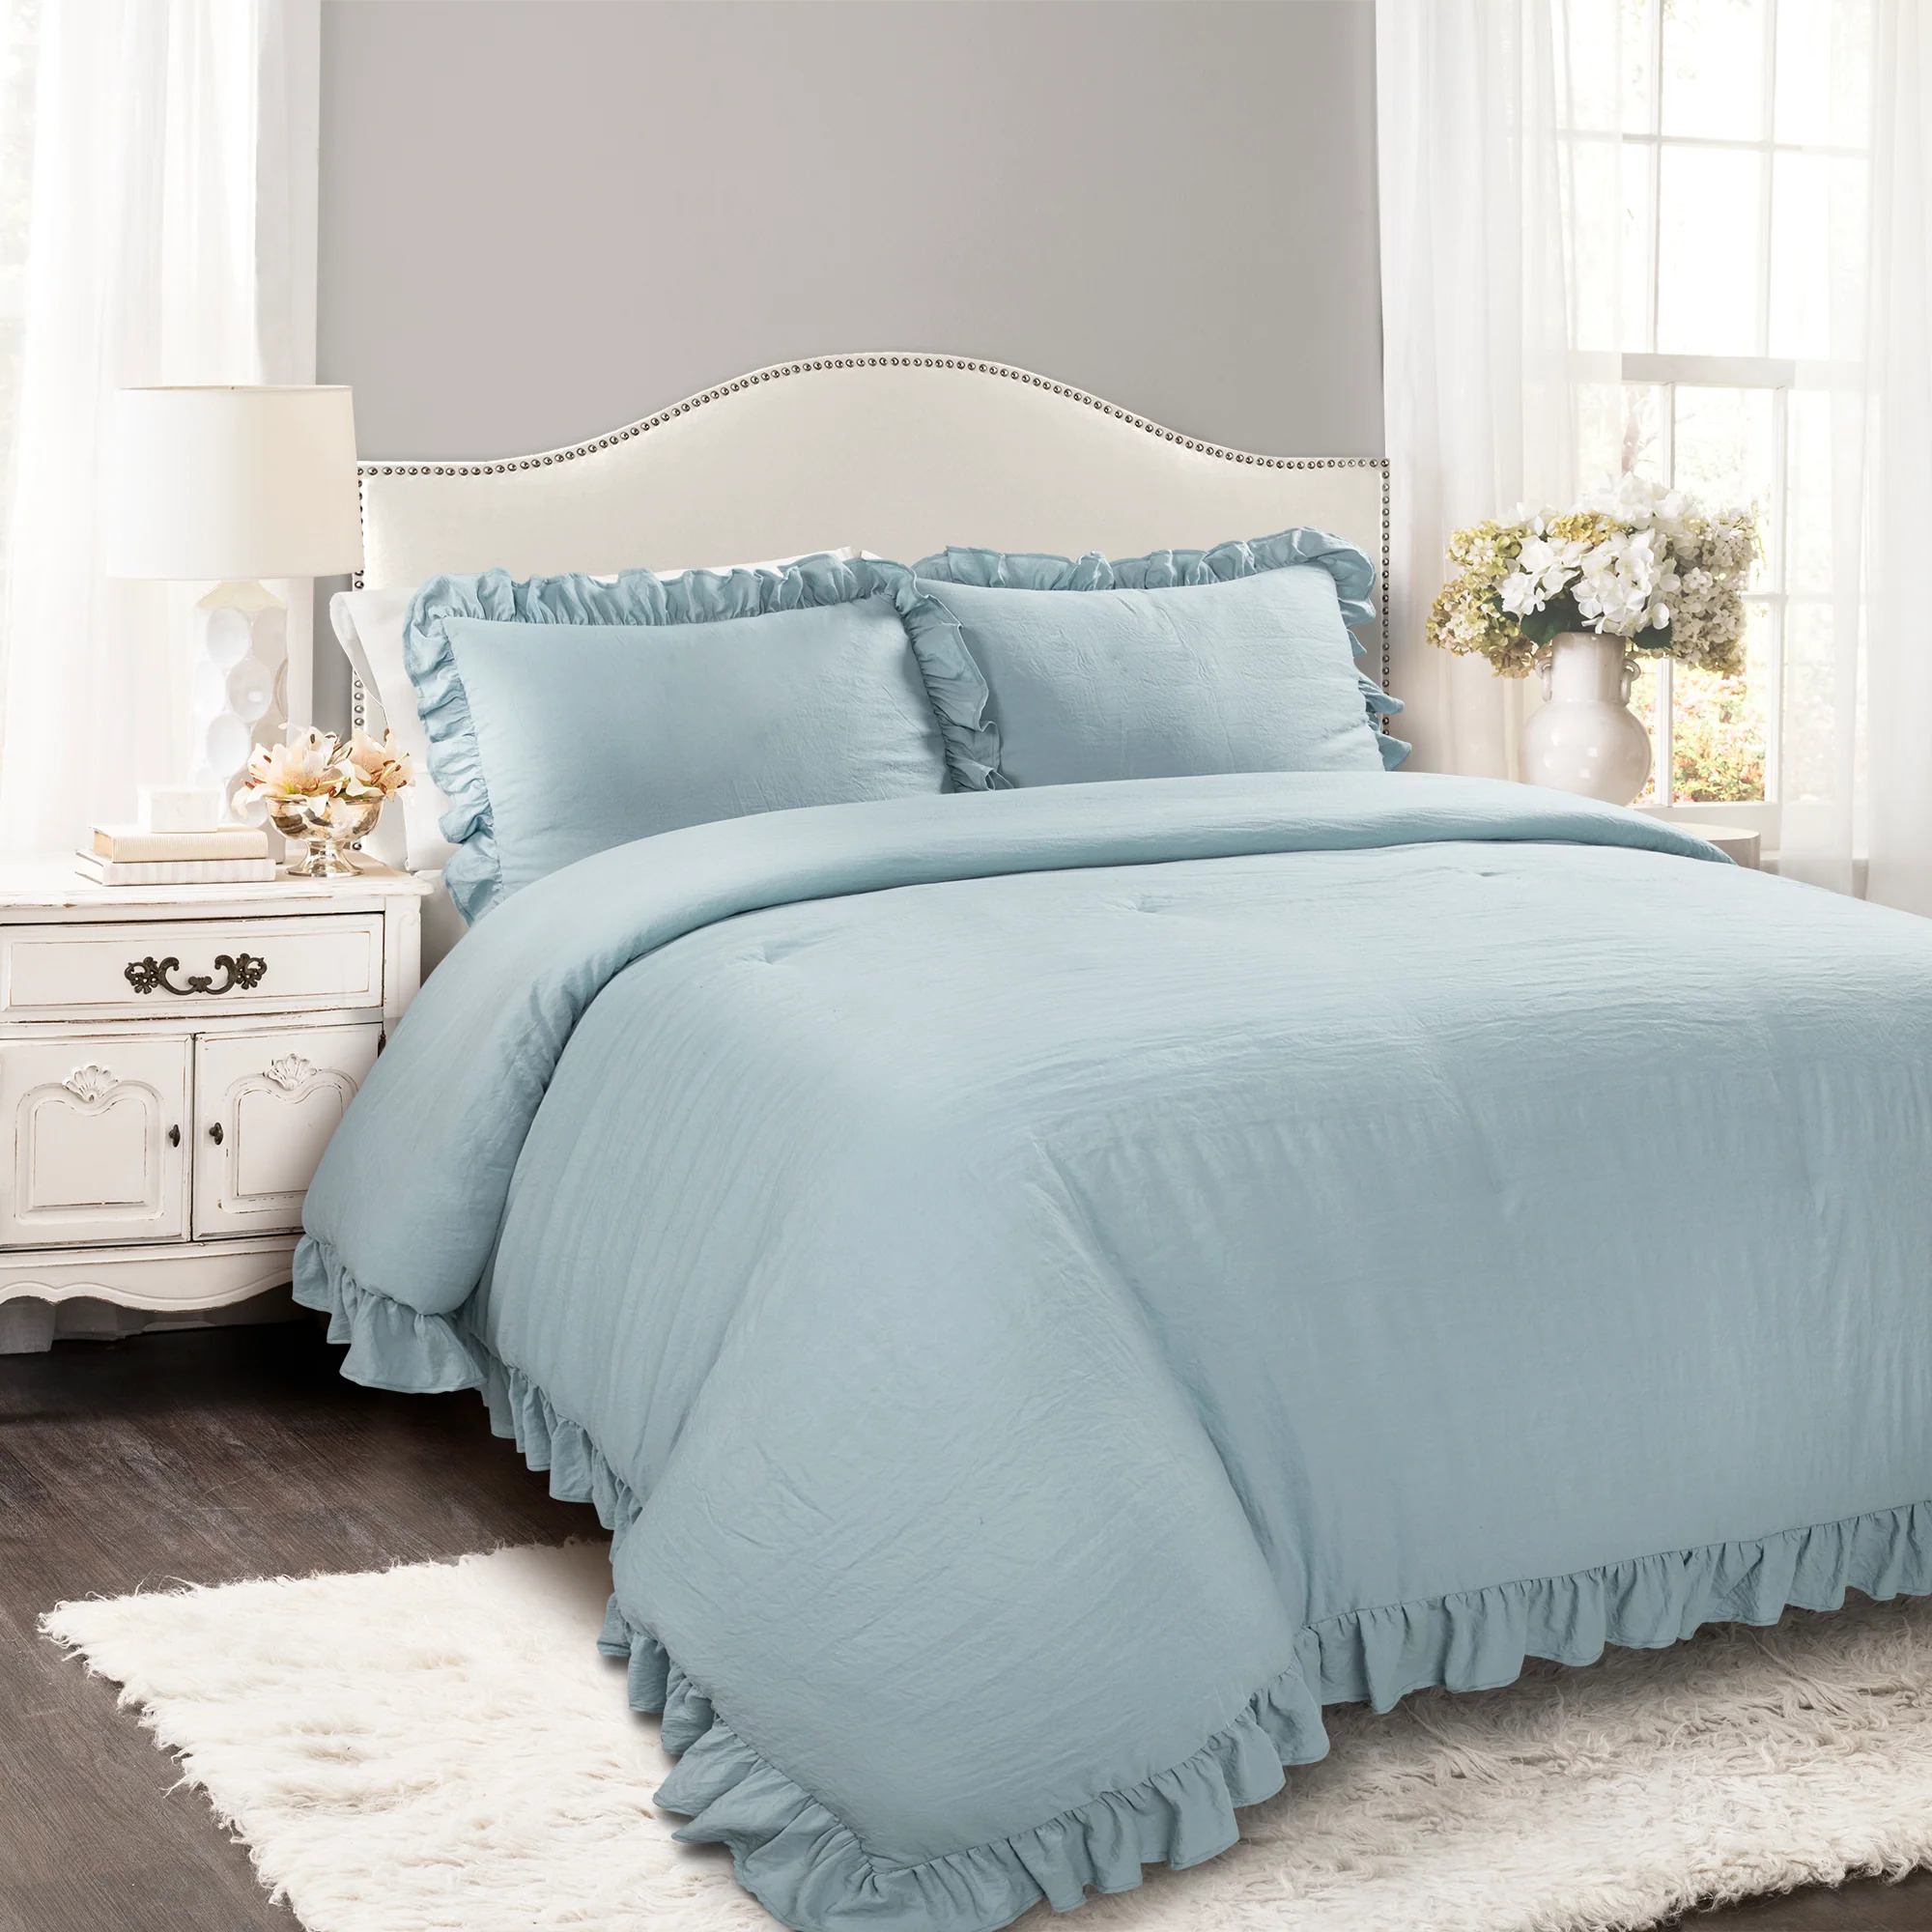 Lush Decor 3 Piece Comforter Sets, King with Pillow Shams - image 5 of 10